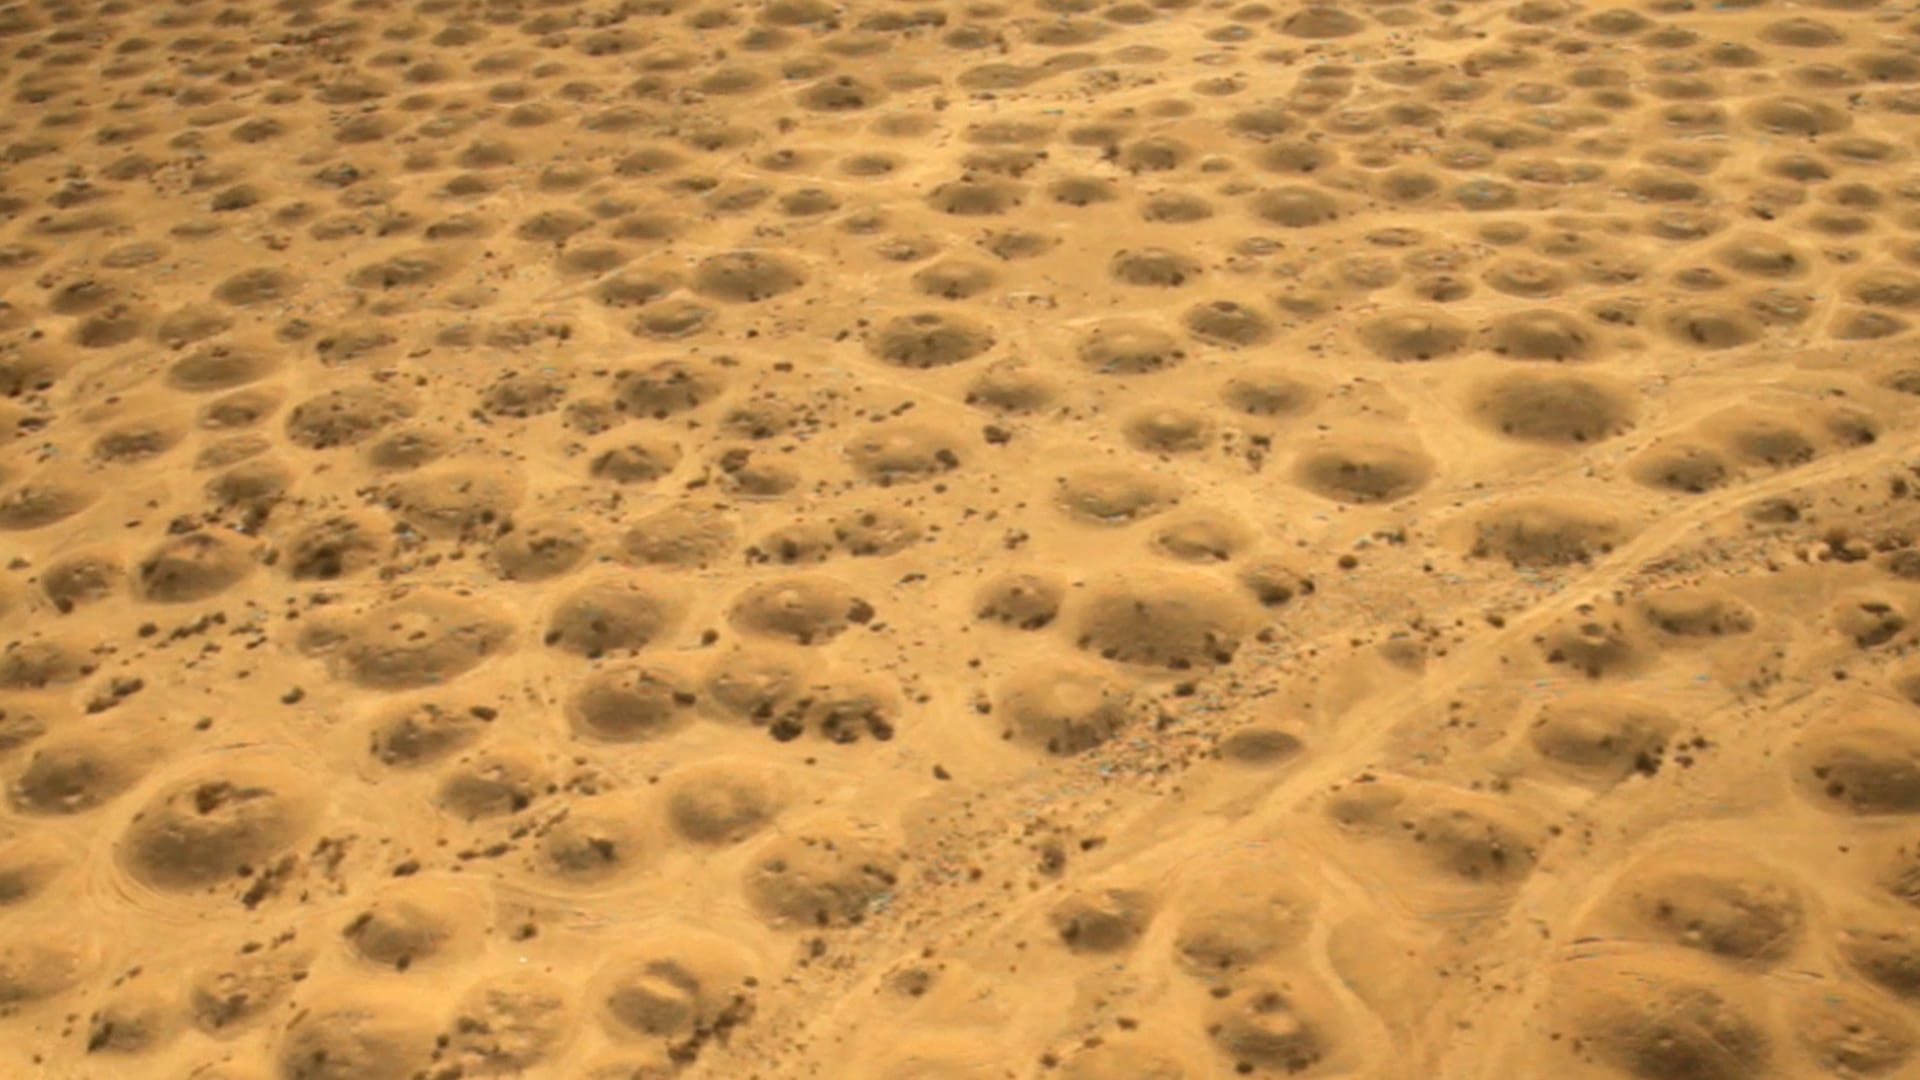 Discover Dilmun Burial Mounds, Bahrain